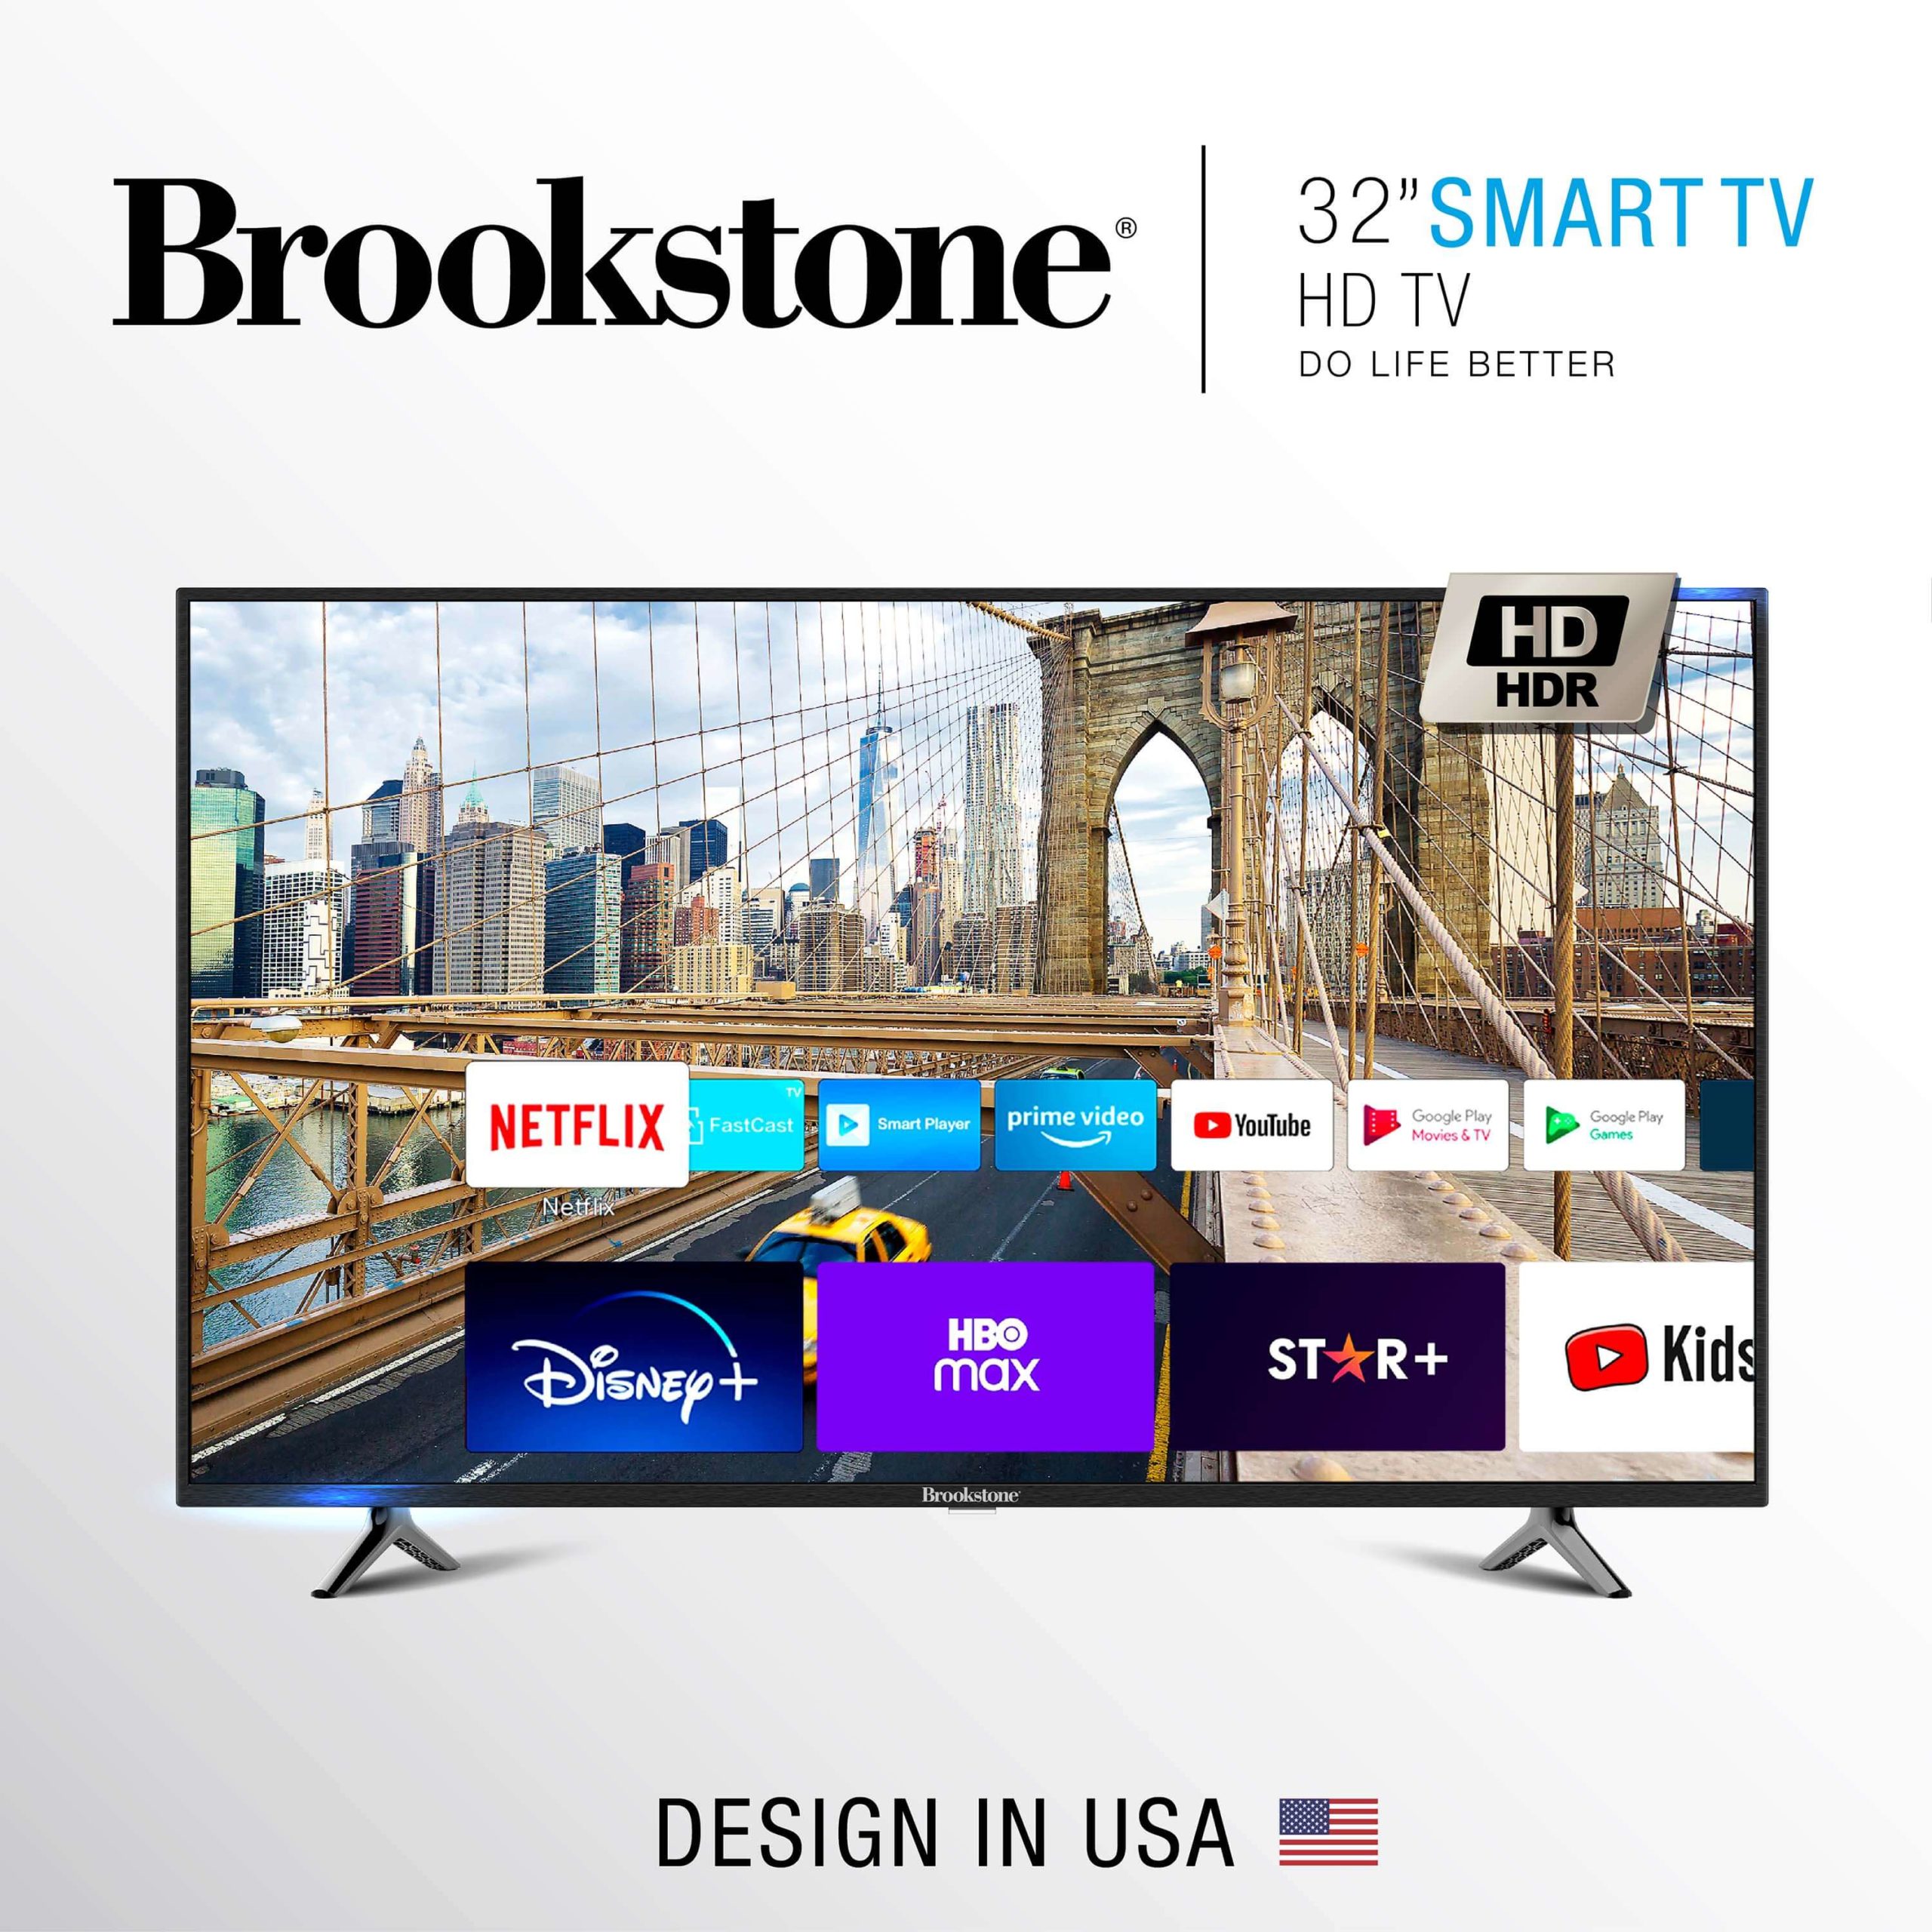 Brookstone HD Smart TV Android 32